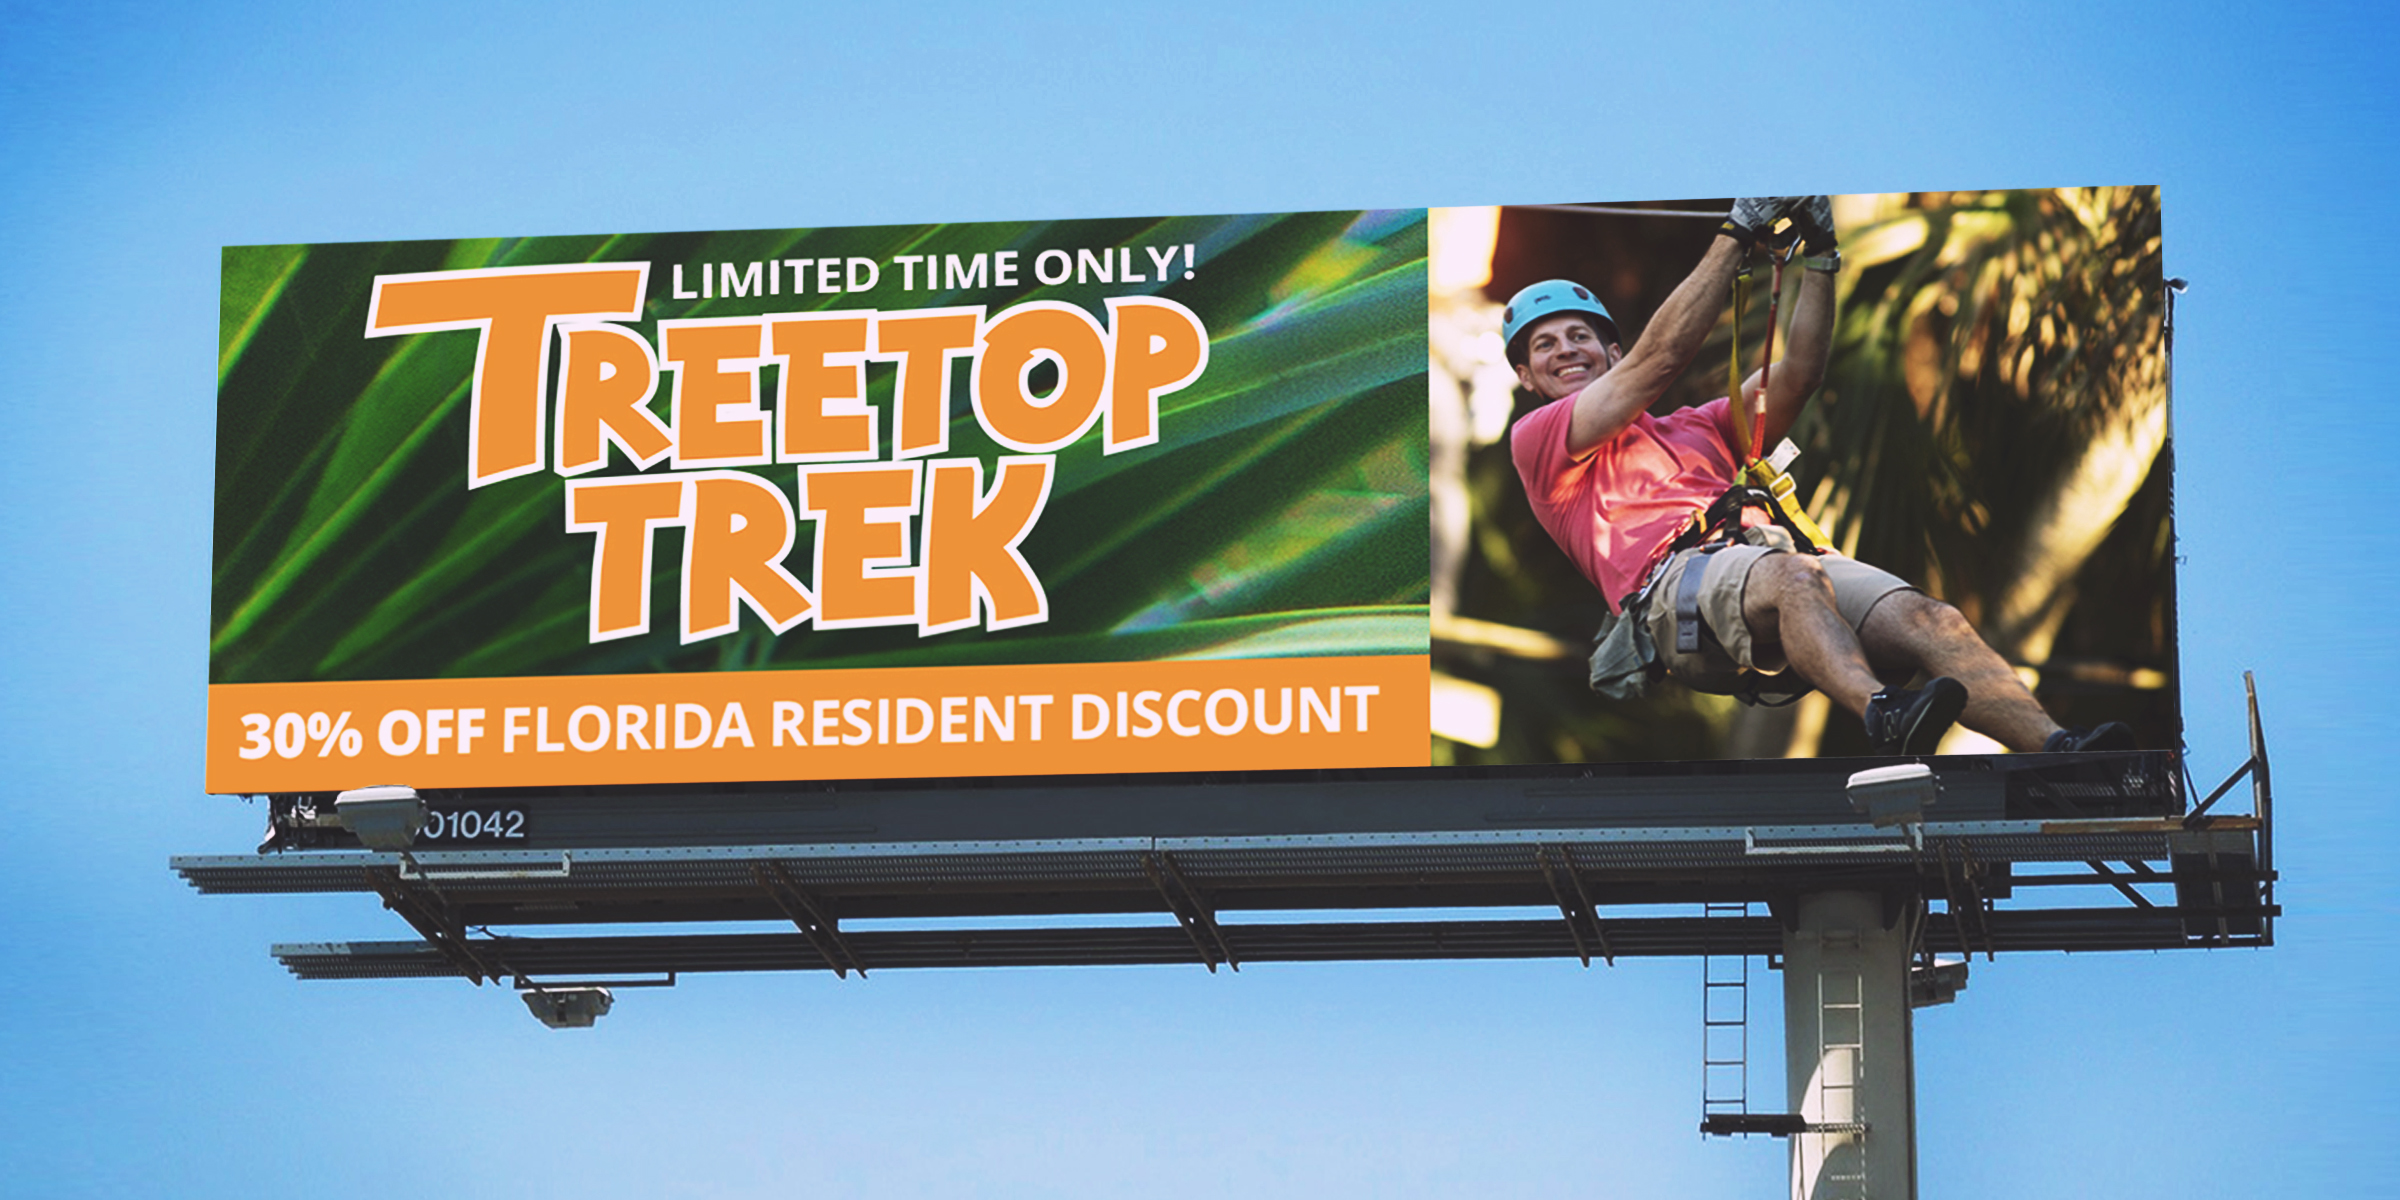 treetop trek fl resident billboard